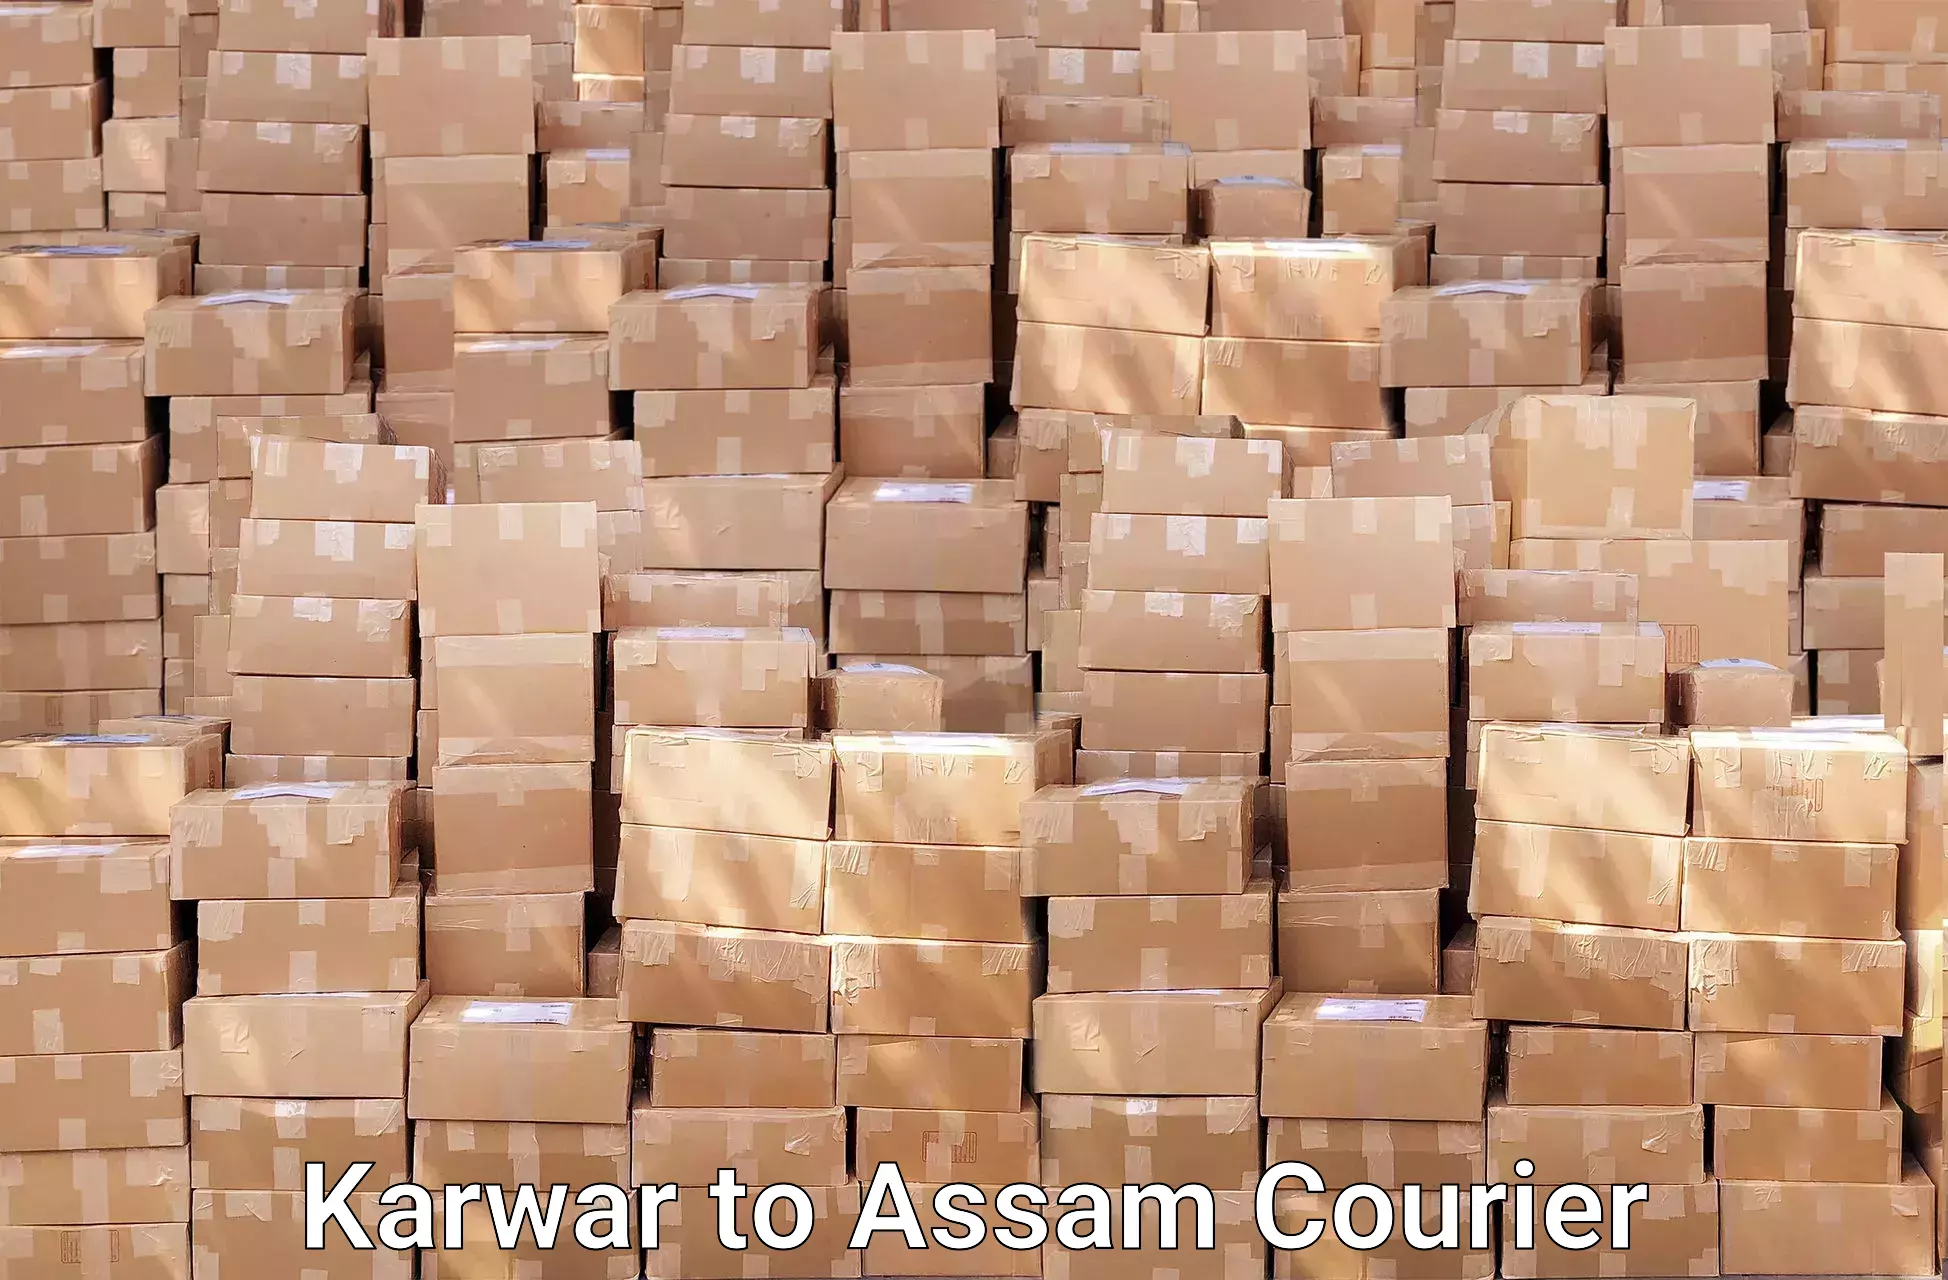 Efficient moving company Karwar to Lala Assam